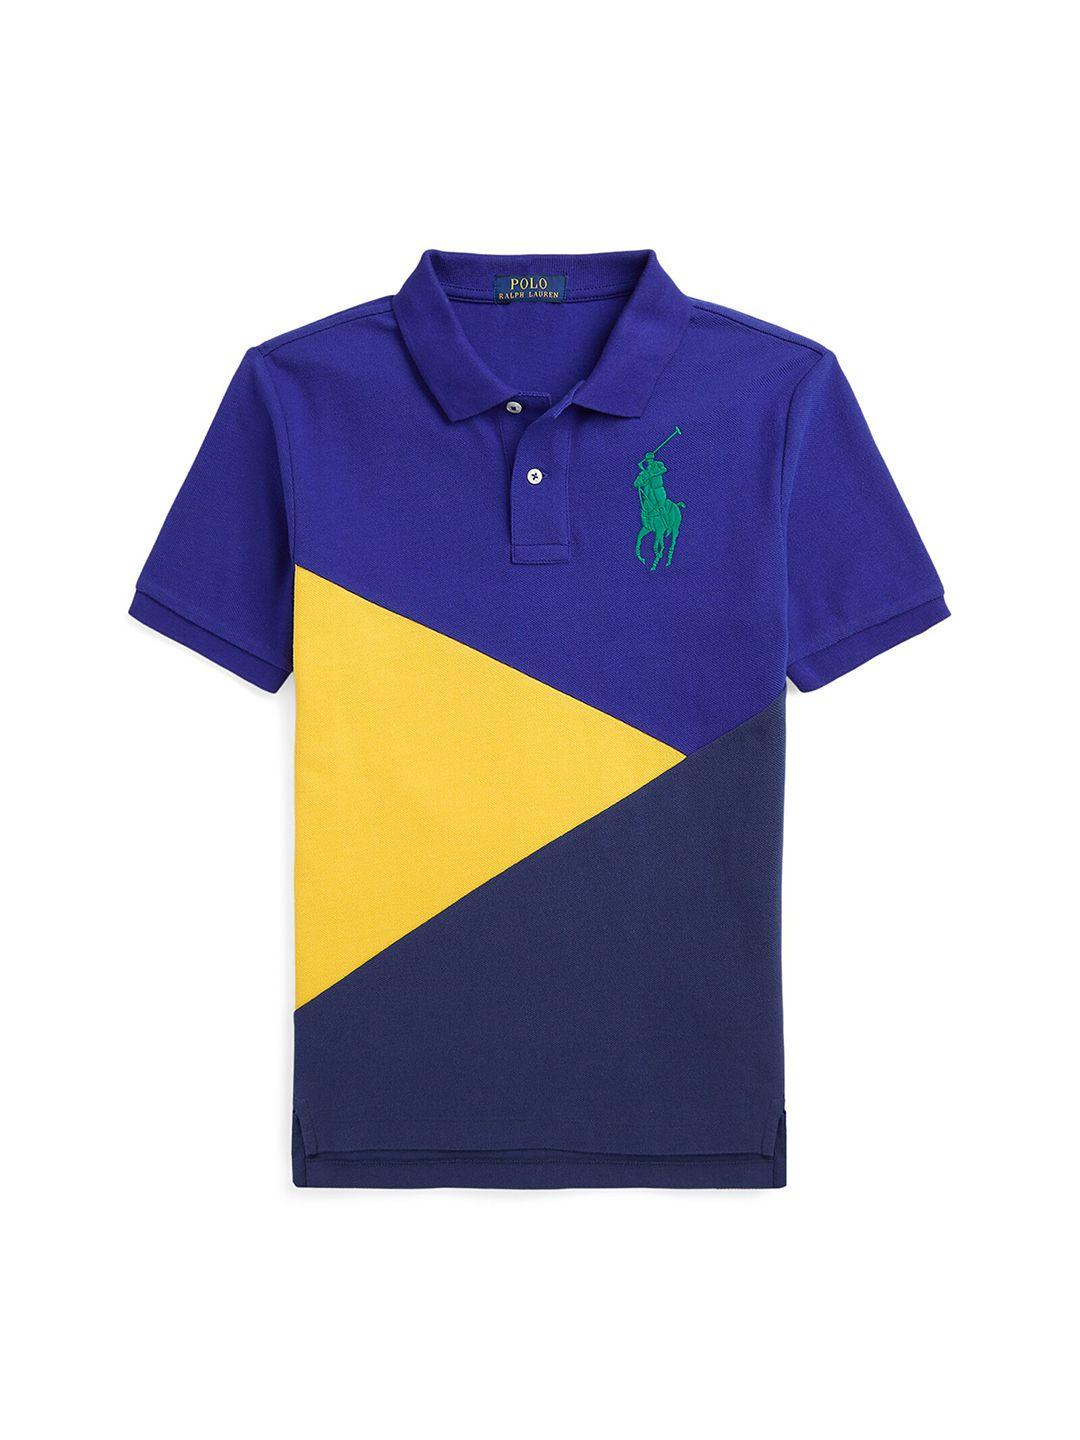 polo ralph lauren boys colourblocked cotton t-shirt